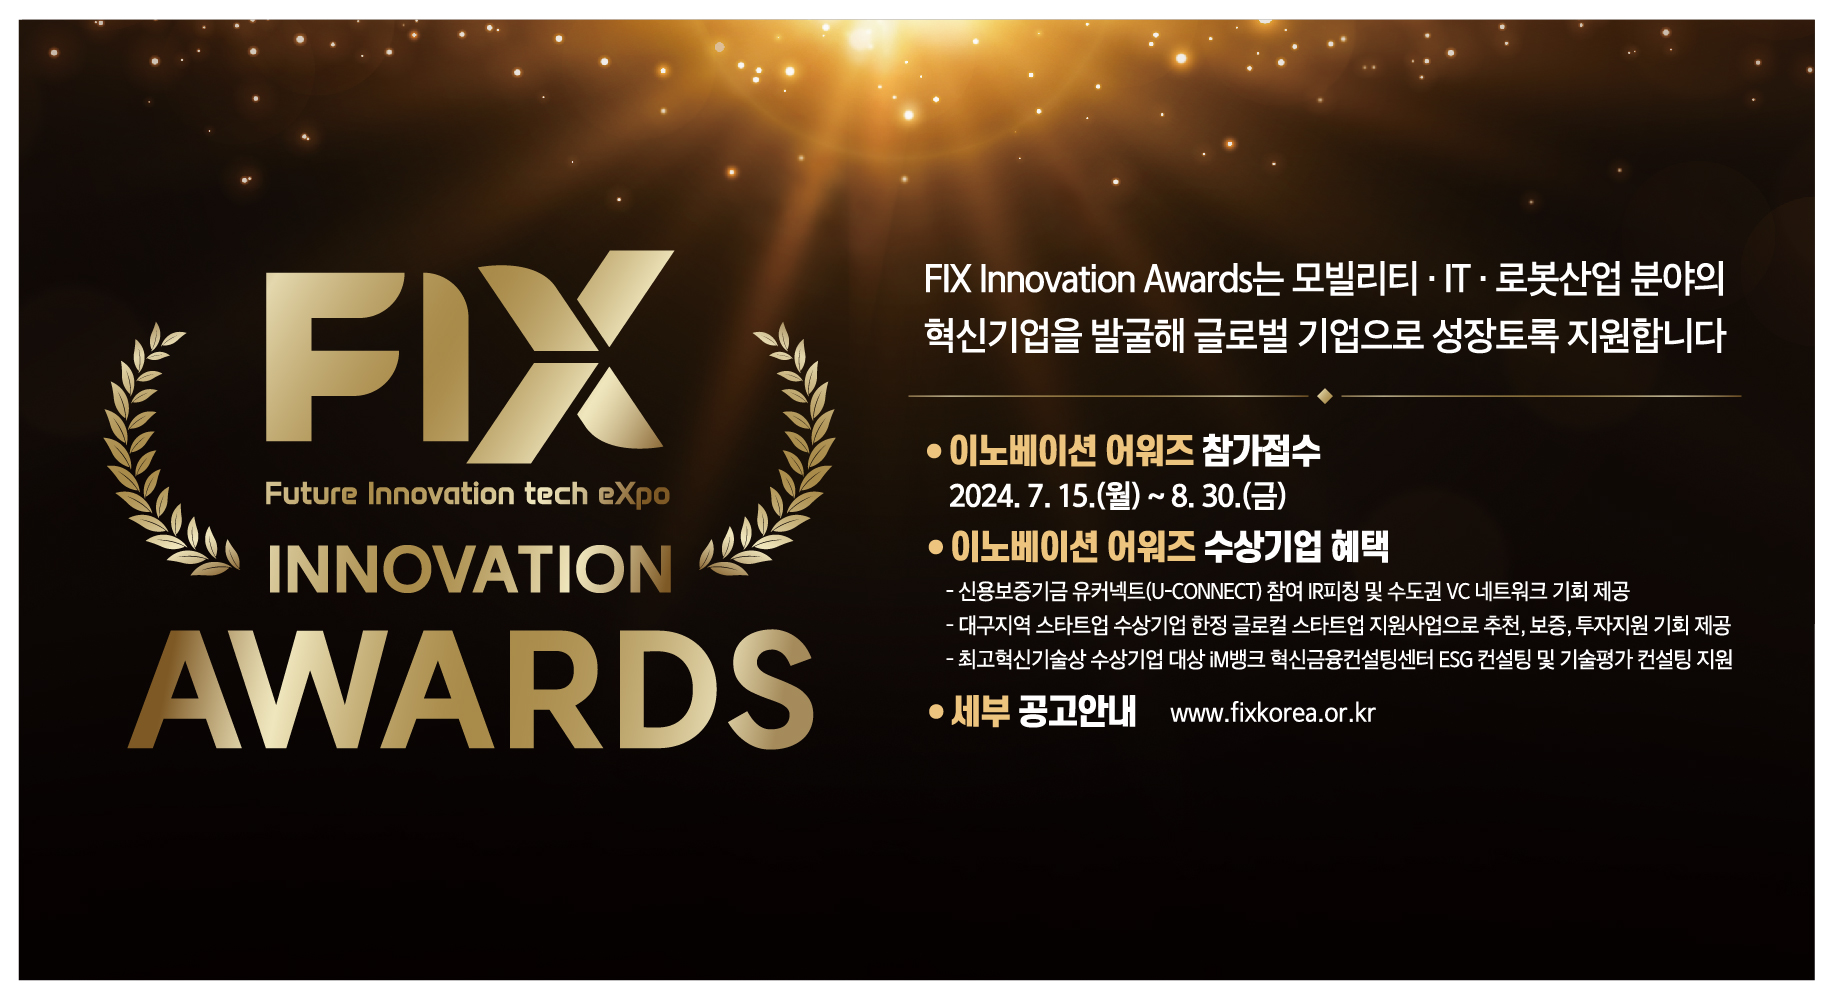 FIX 이노베이션 어워즈(Innovation Awards)’에 도전하세요!(유료_윤지혜)